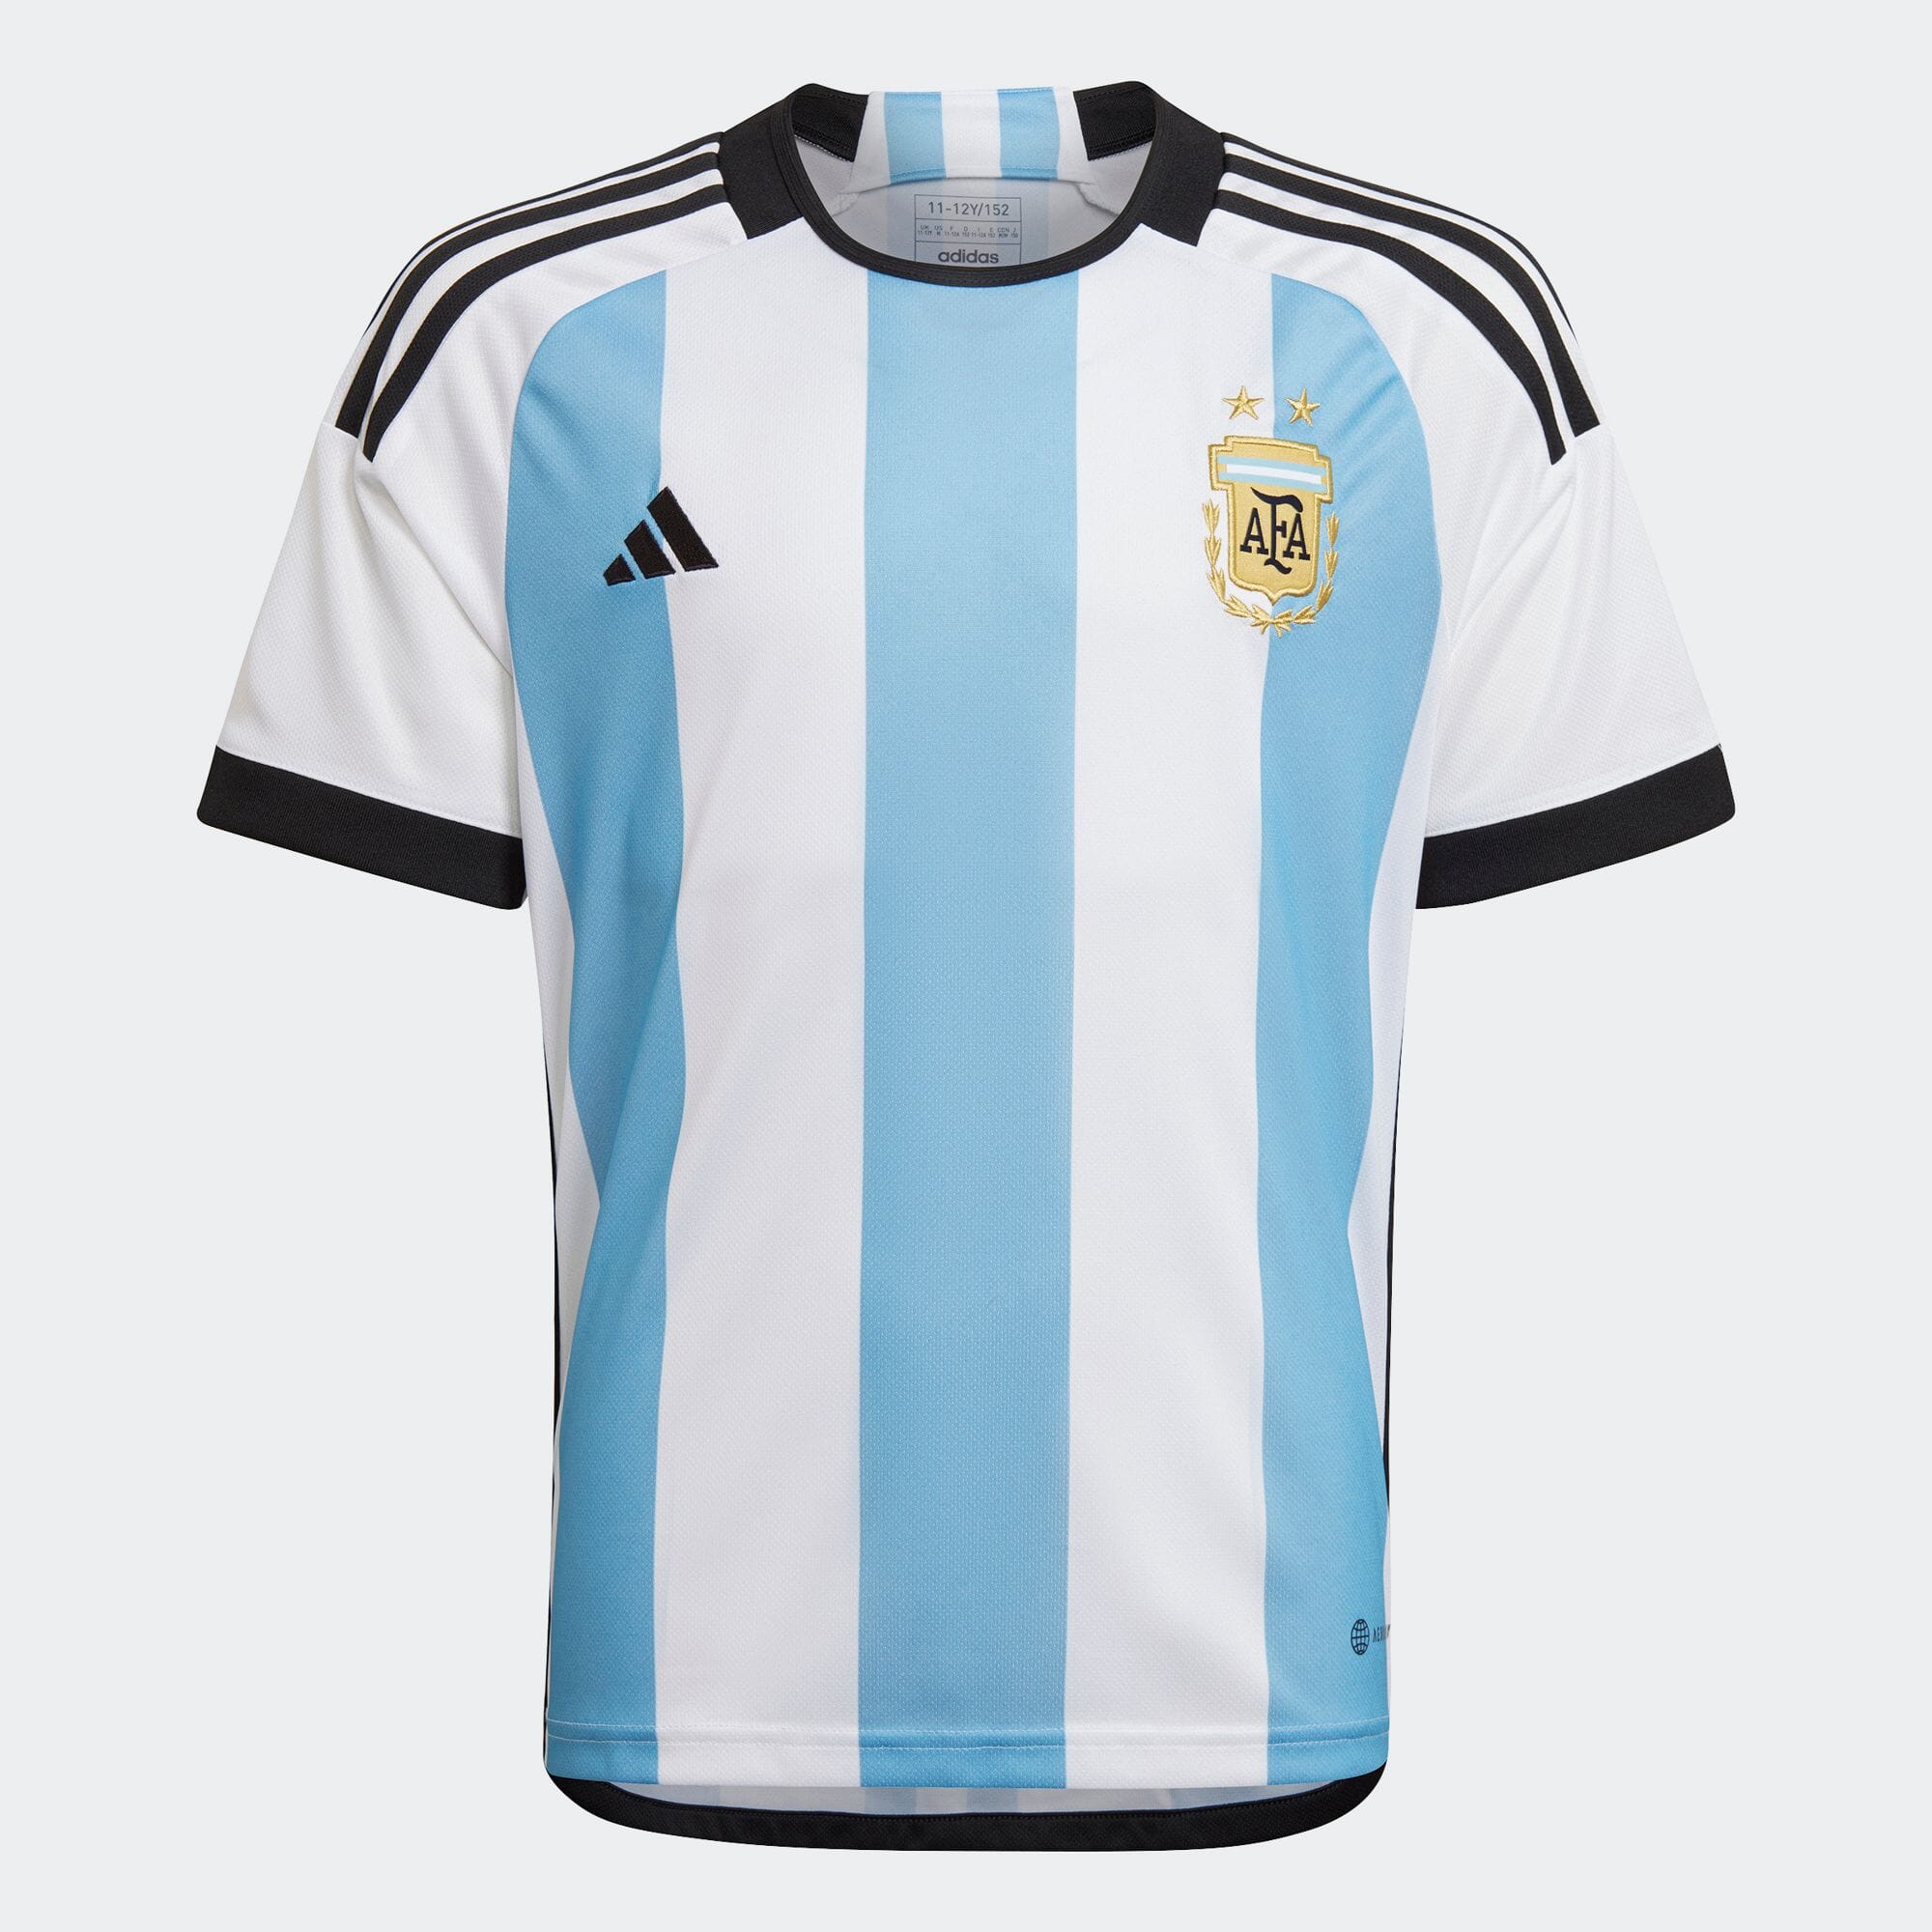 NEW サッカーユニフォーム レプリカ メッシ アルゼンチン代表 キッズ 130cm k